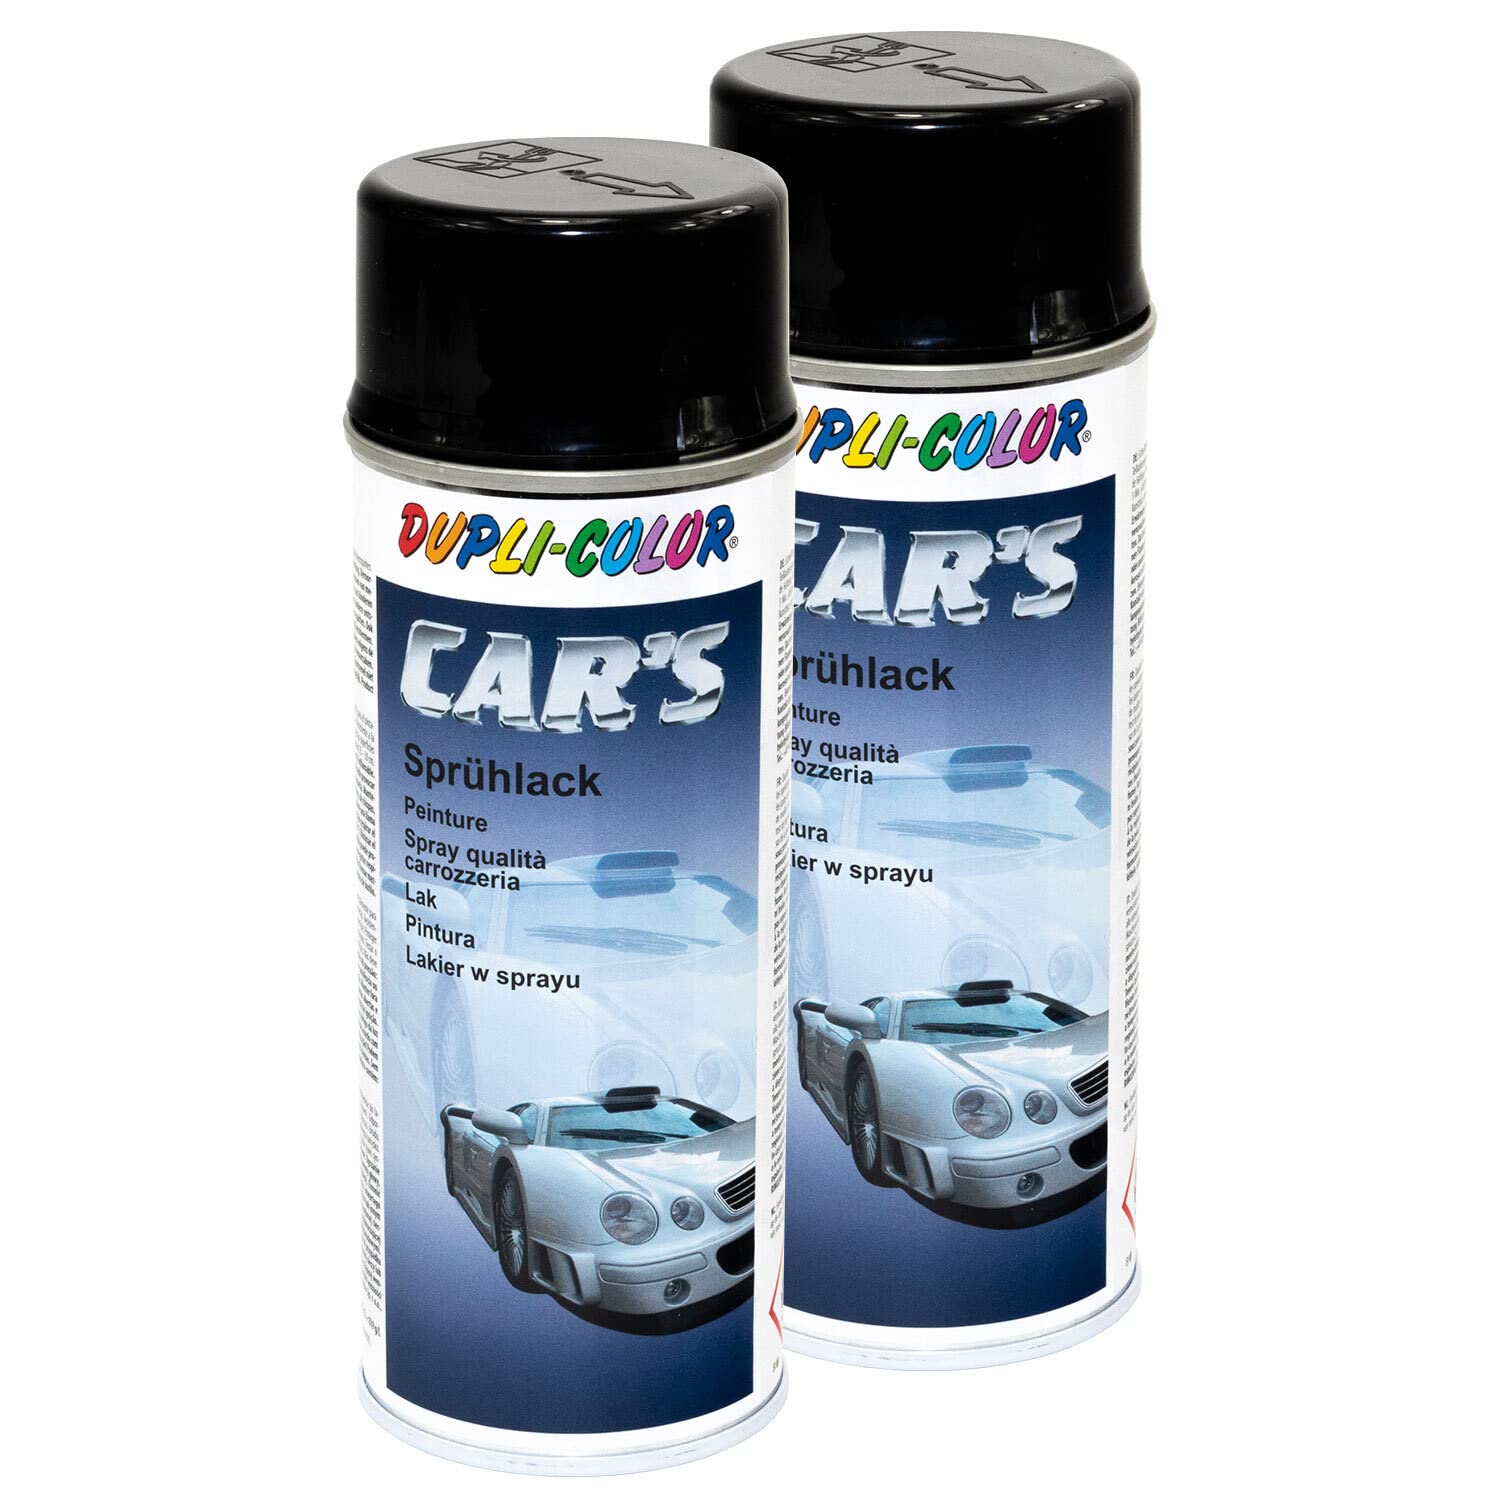 Lackspray Spraydose Sprühlack Cars Dupli Color 385865 schwarz glänzend 2 X 400 ml von DUPLI_bundle